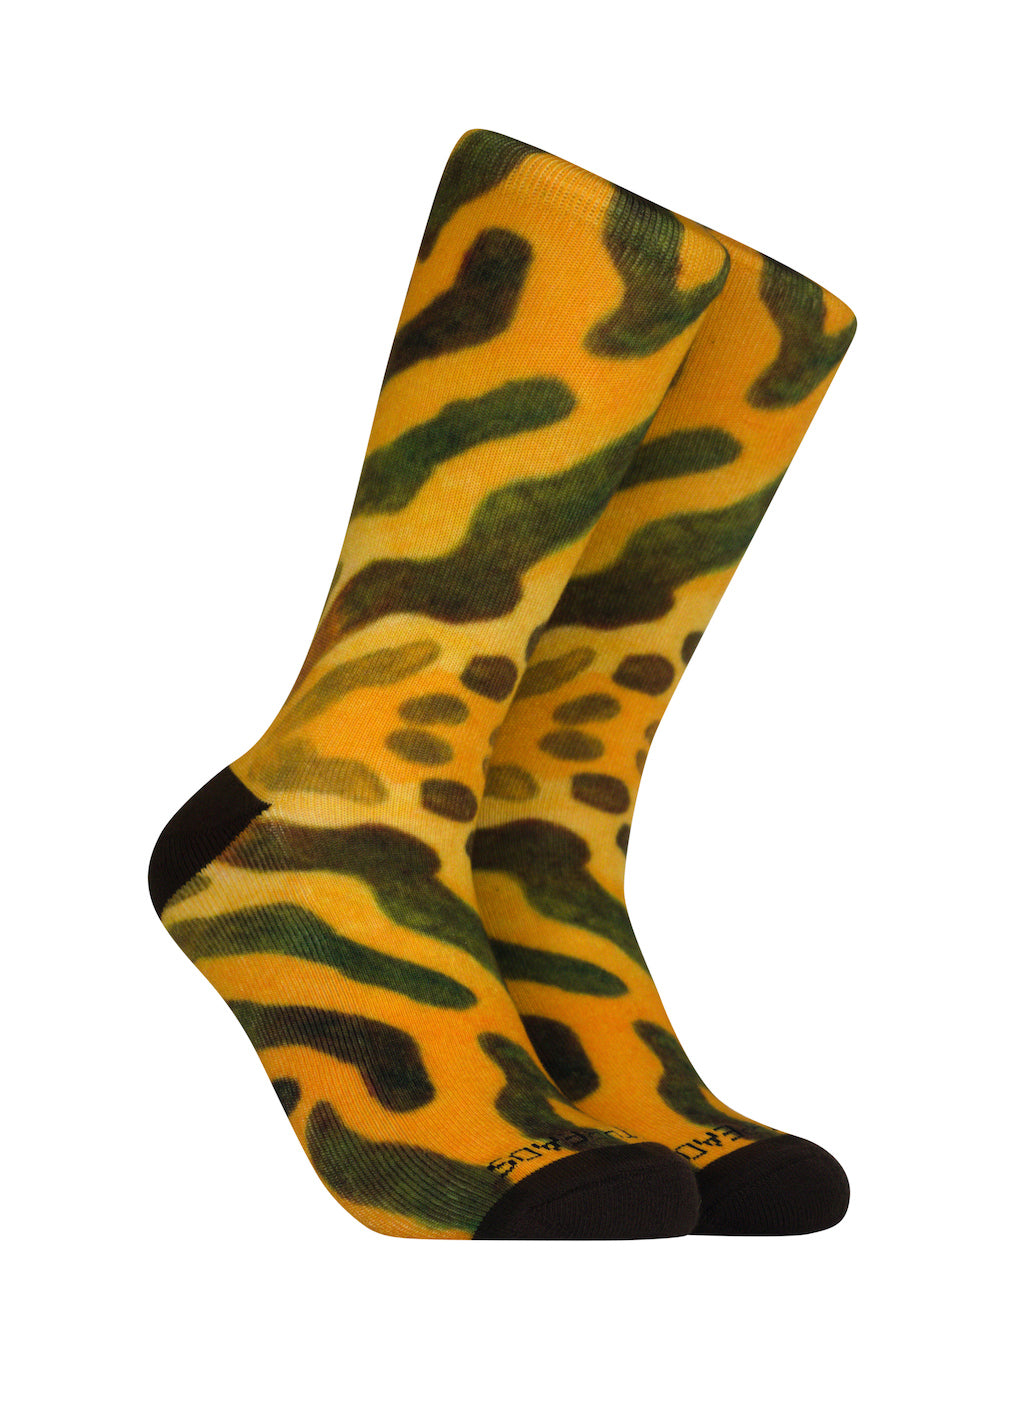 Muskellunge Socks - Novelty Fish Socks- Gifts for Fishermen – Reel